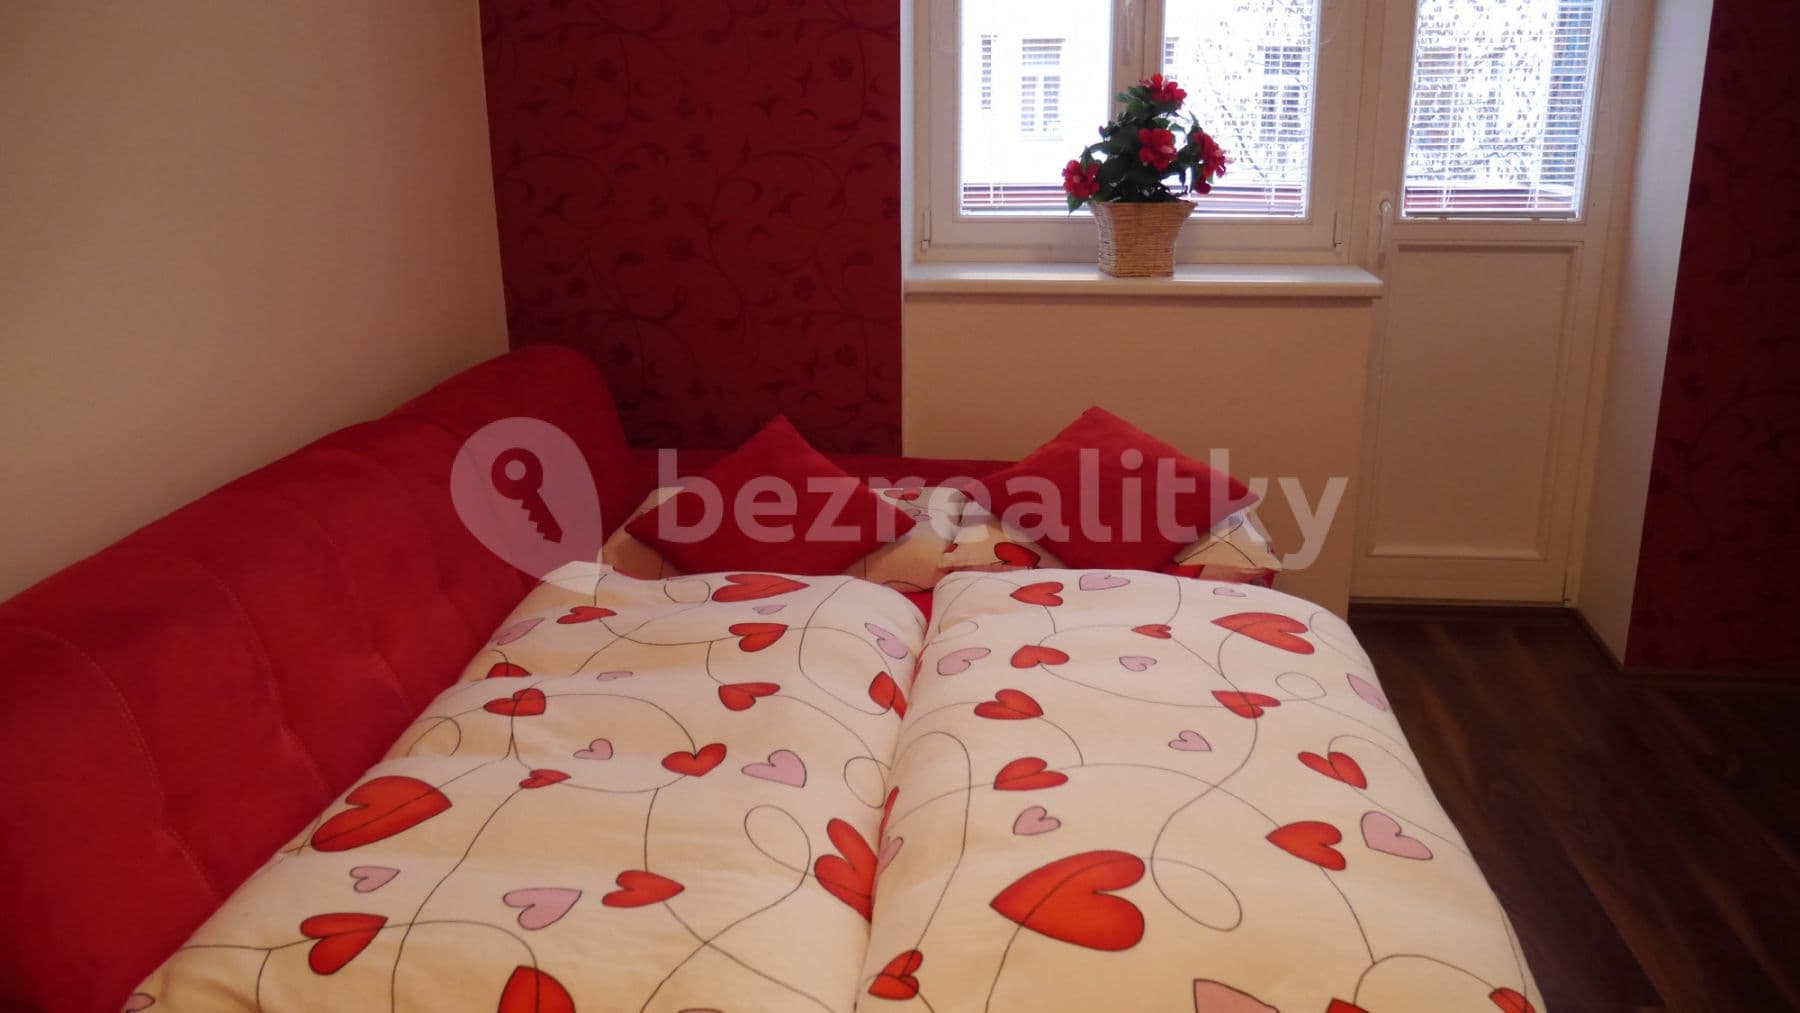 2 bedroom flat to rent, 45 m², Sportovní, Prague, Prague